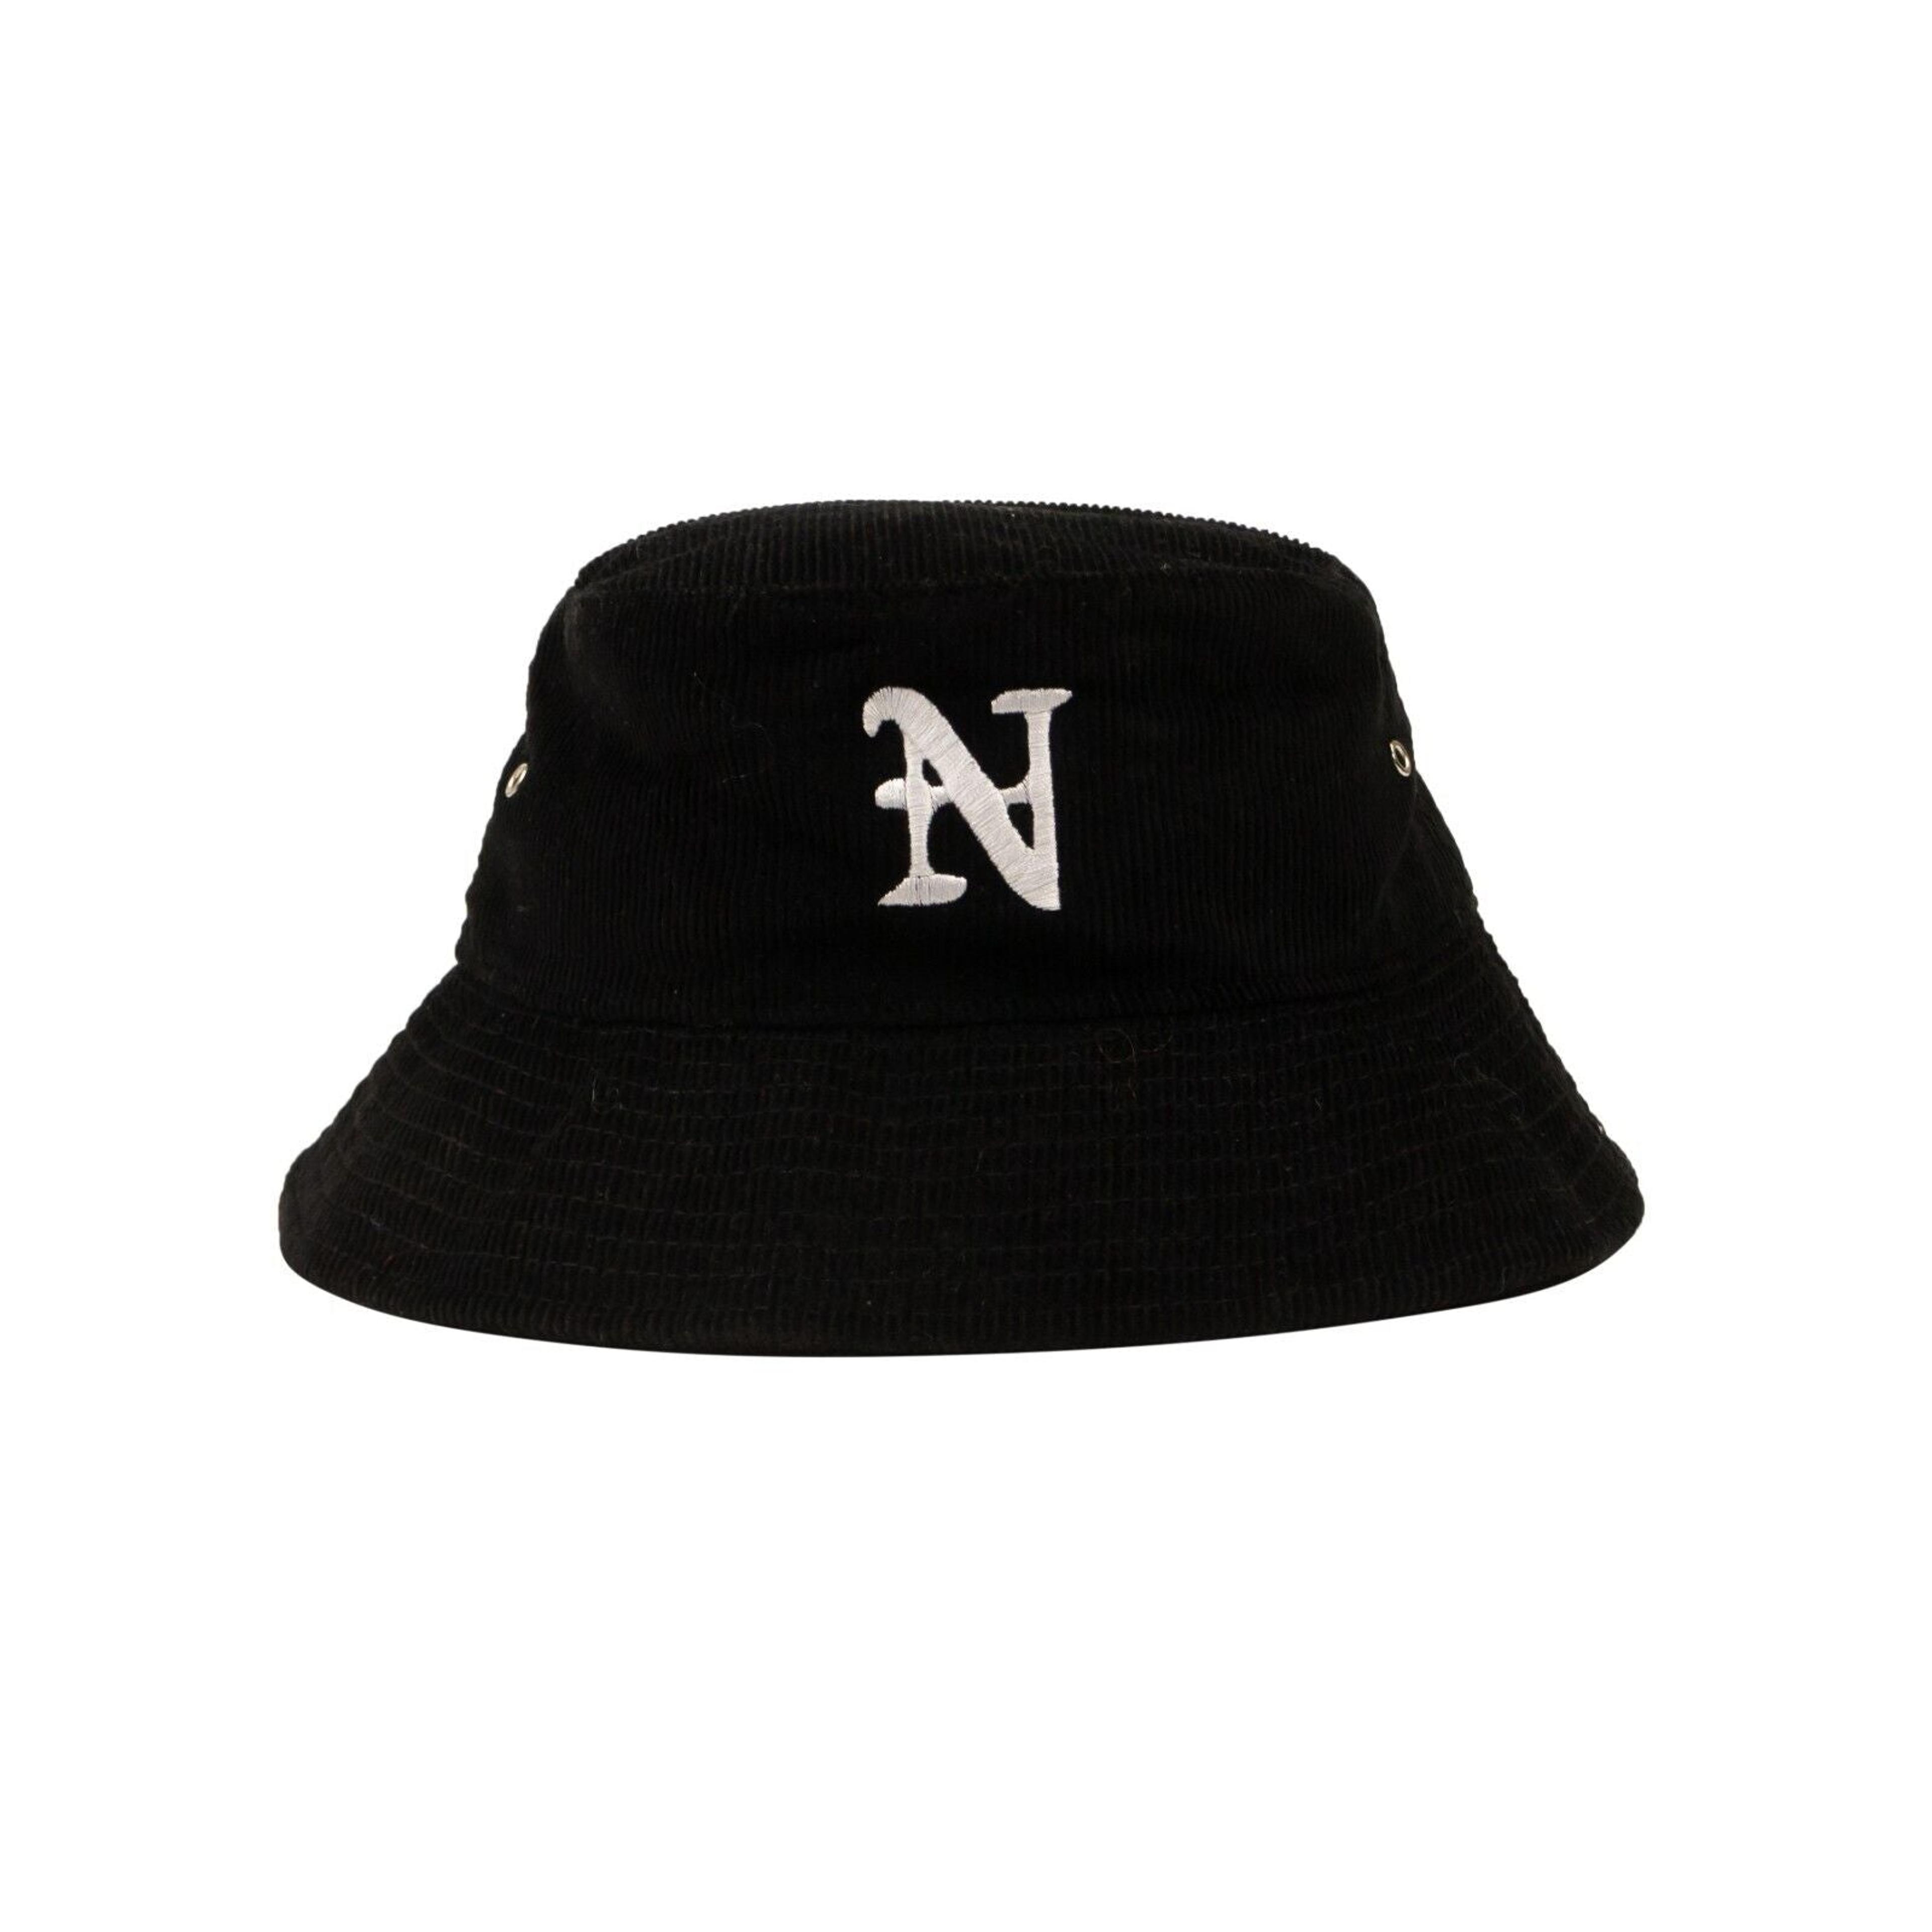 Alternate View 1 of Black Cotton Corduroy Bucket Hat